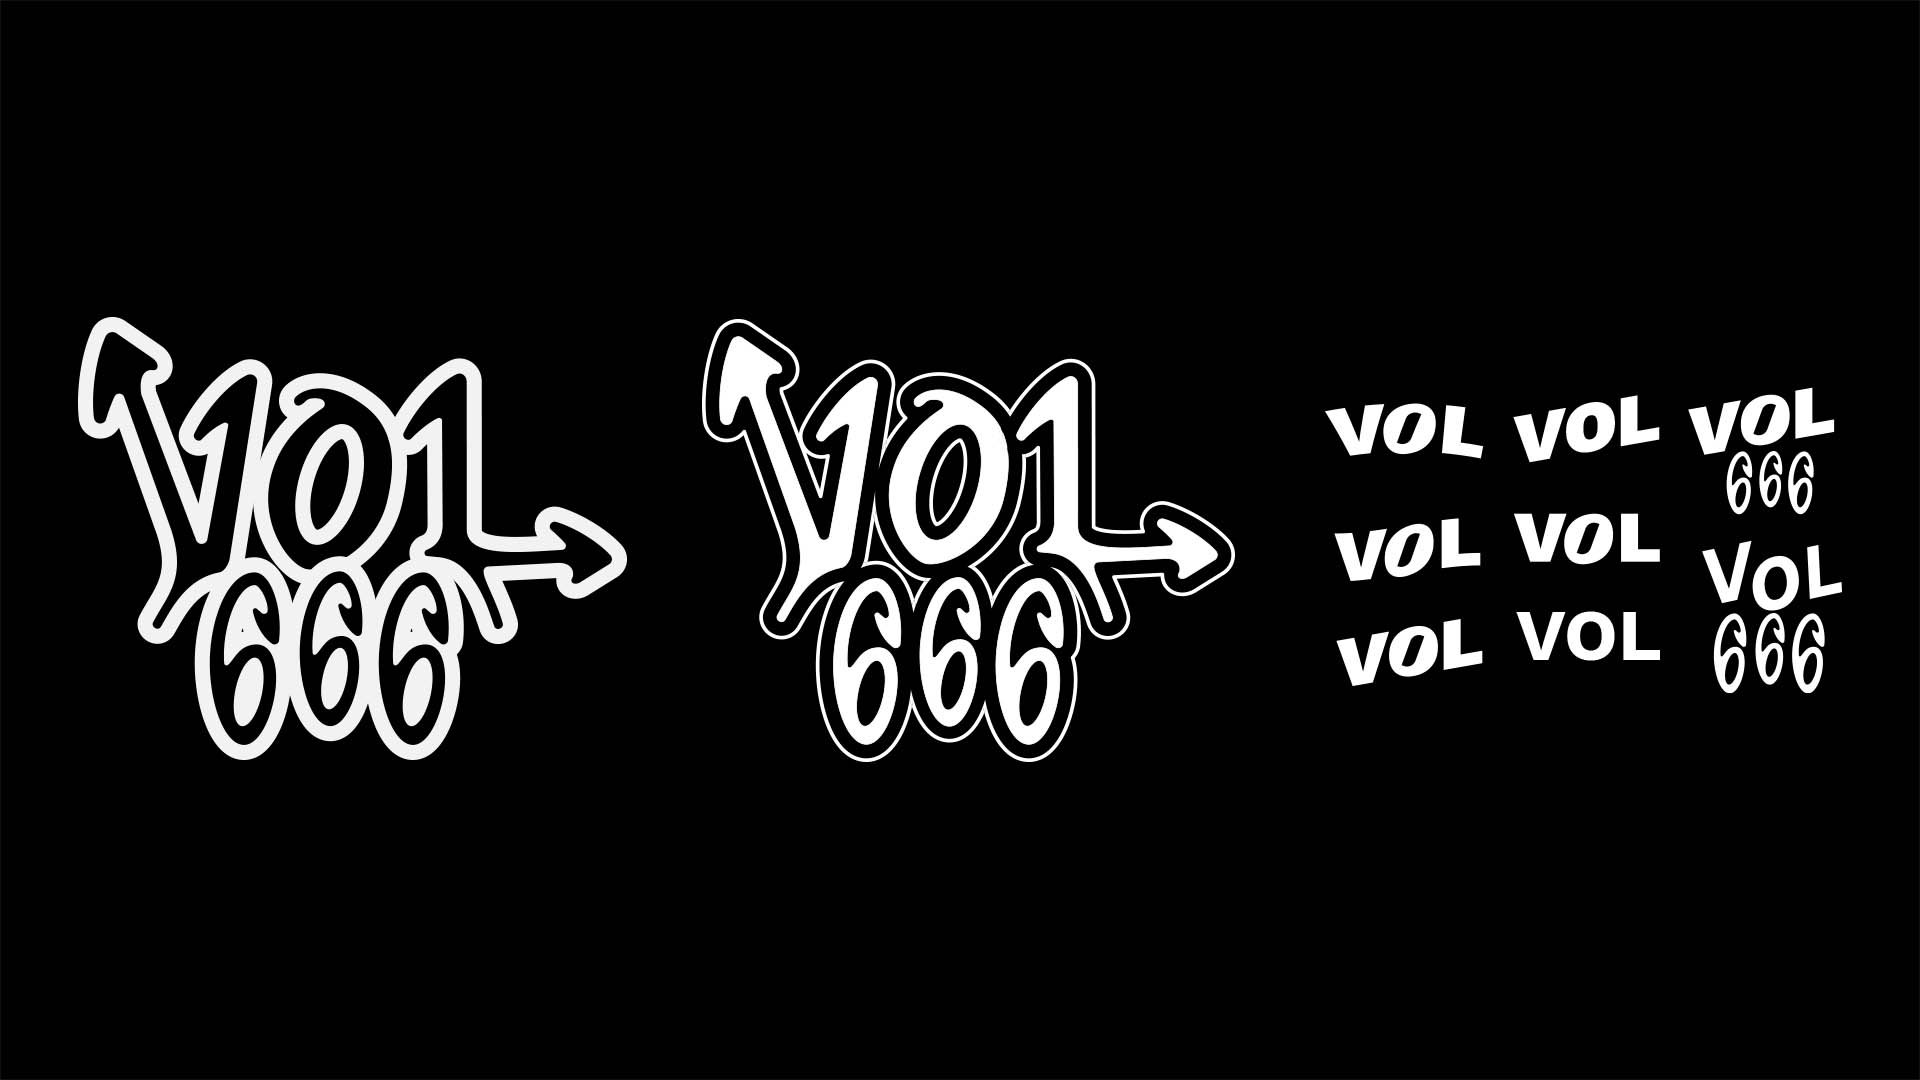 vol 666 animation esma nantes logo laura francois